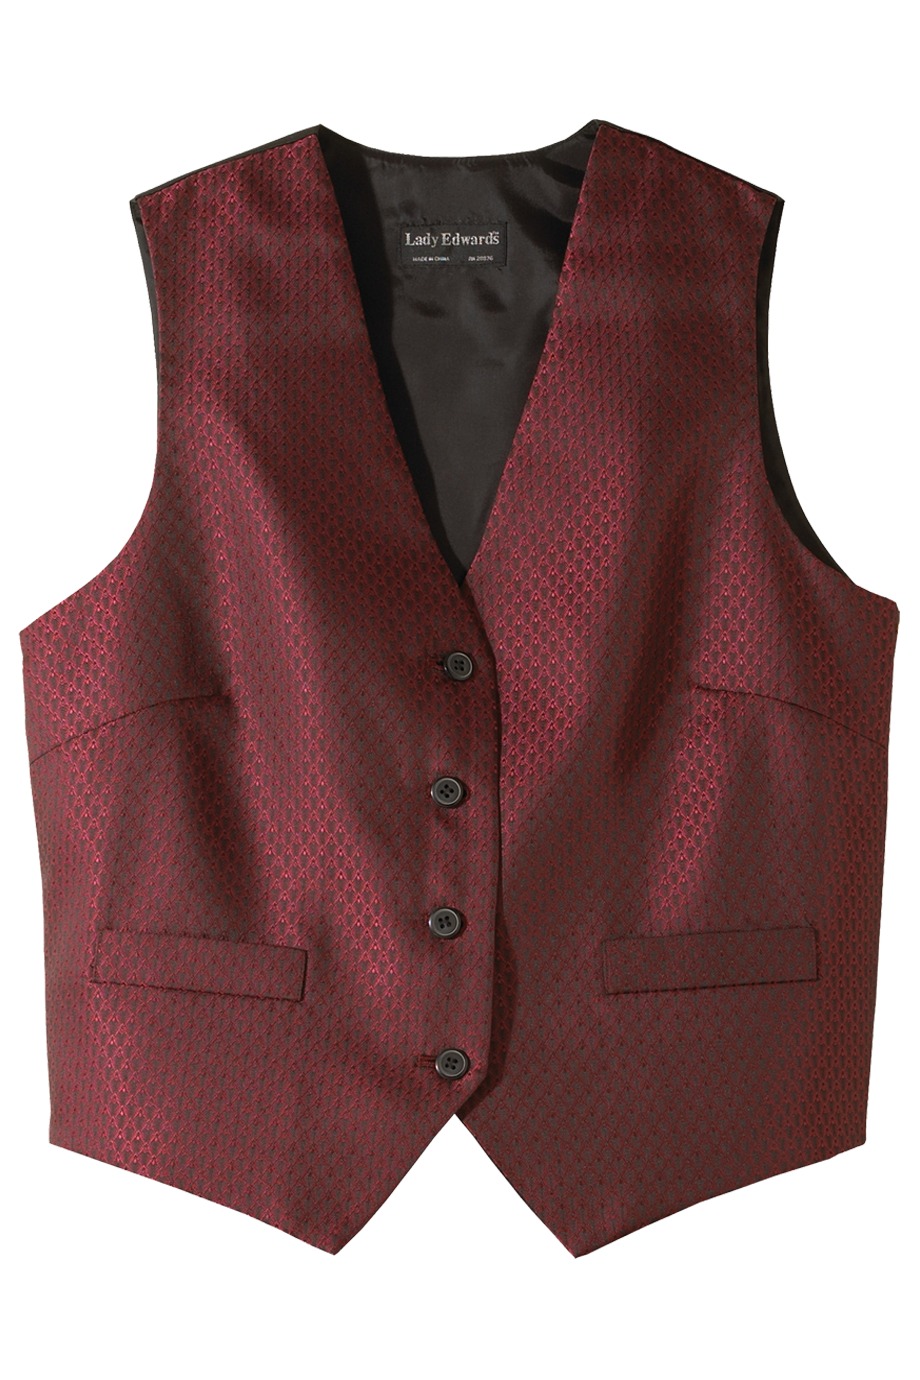 Edwards Garment 7390 - Women's Diamond Brocade Vest